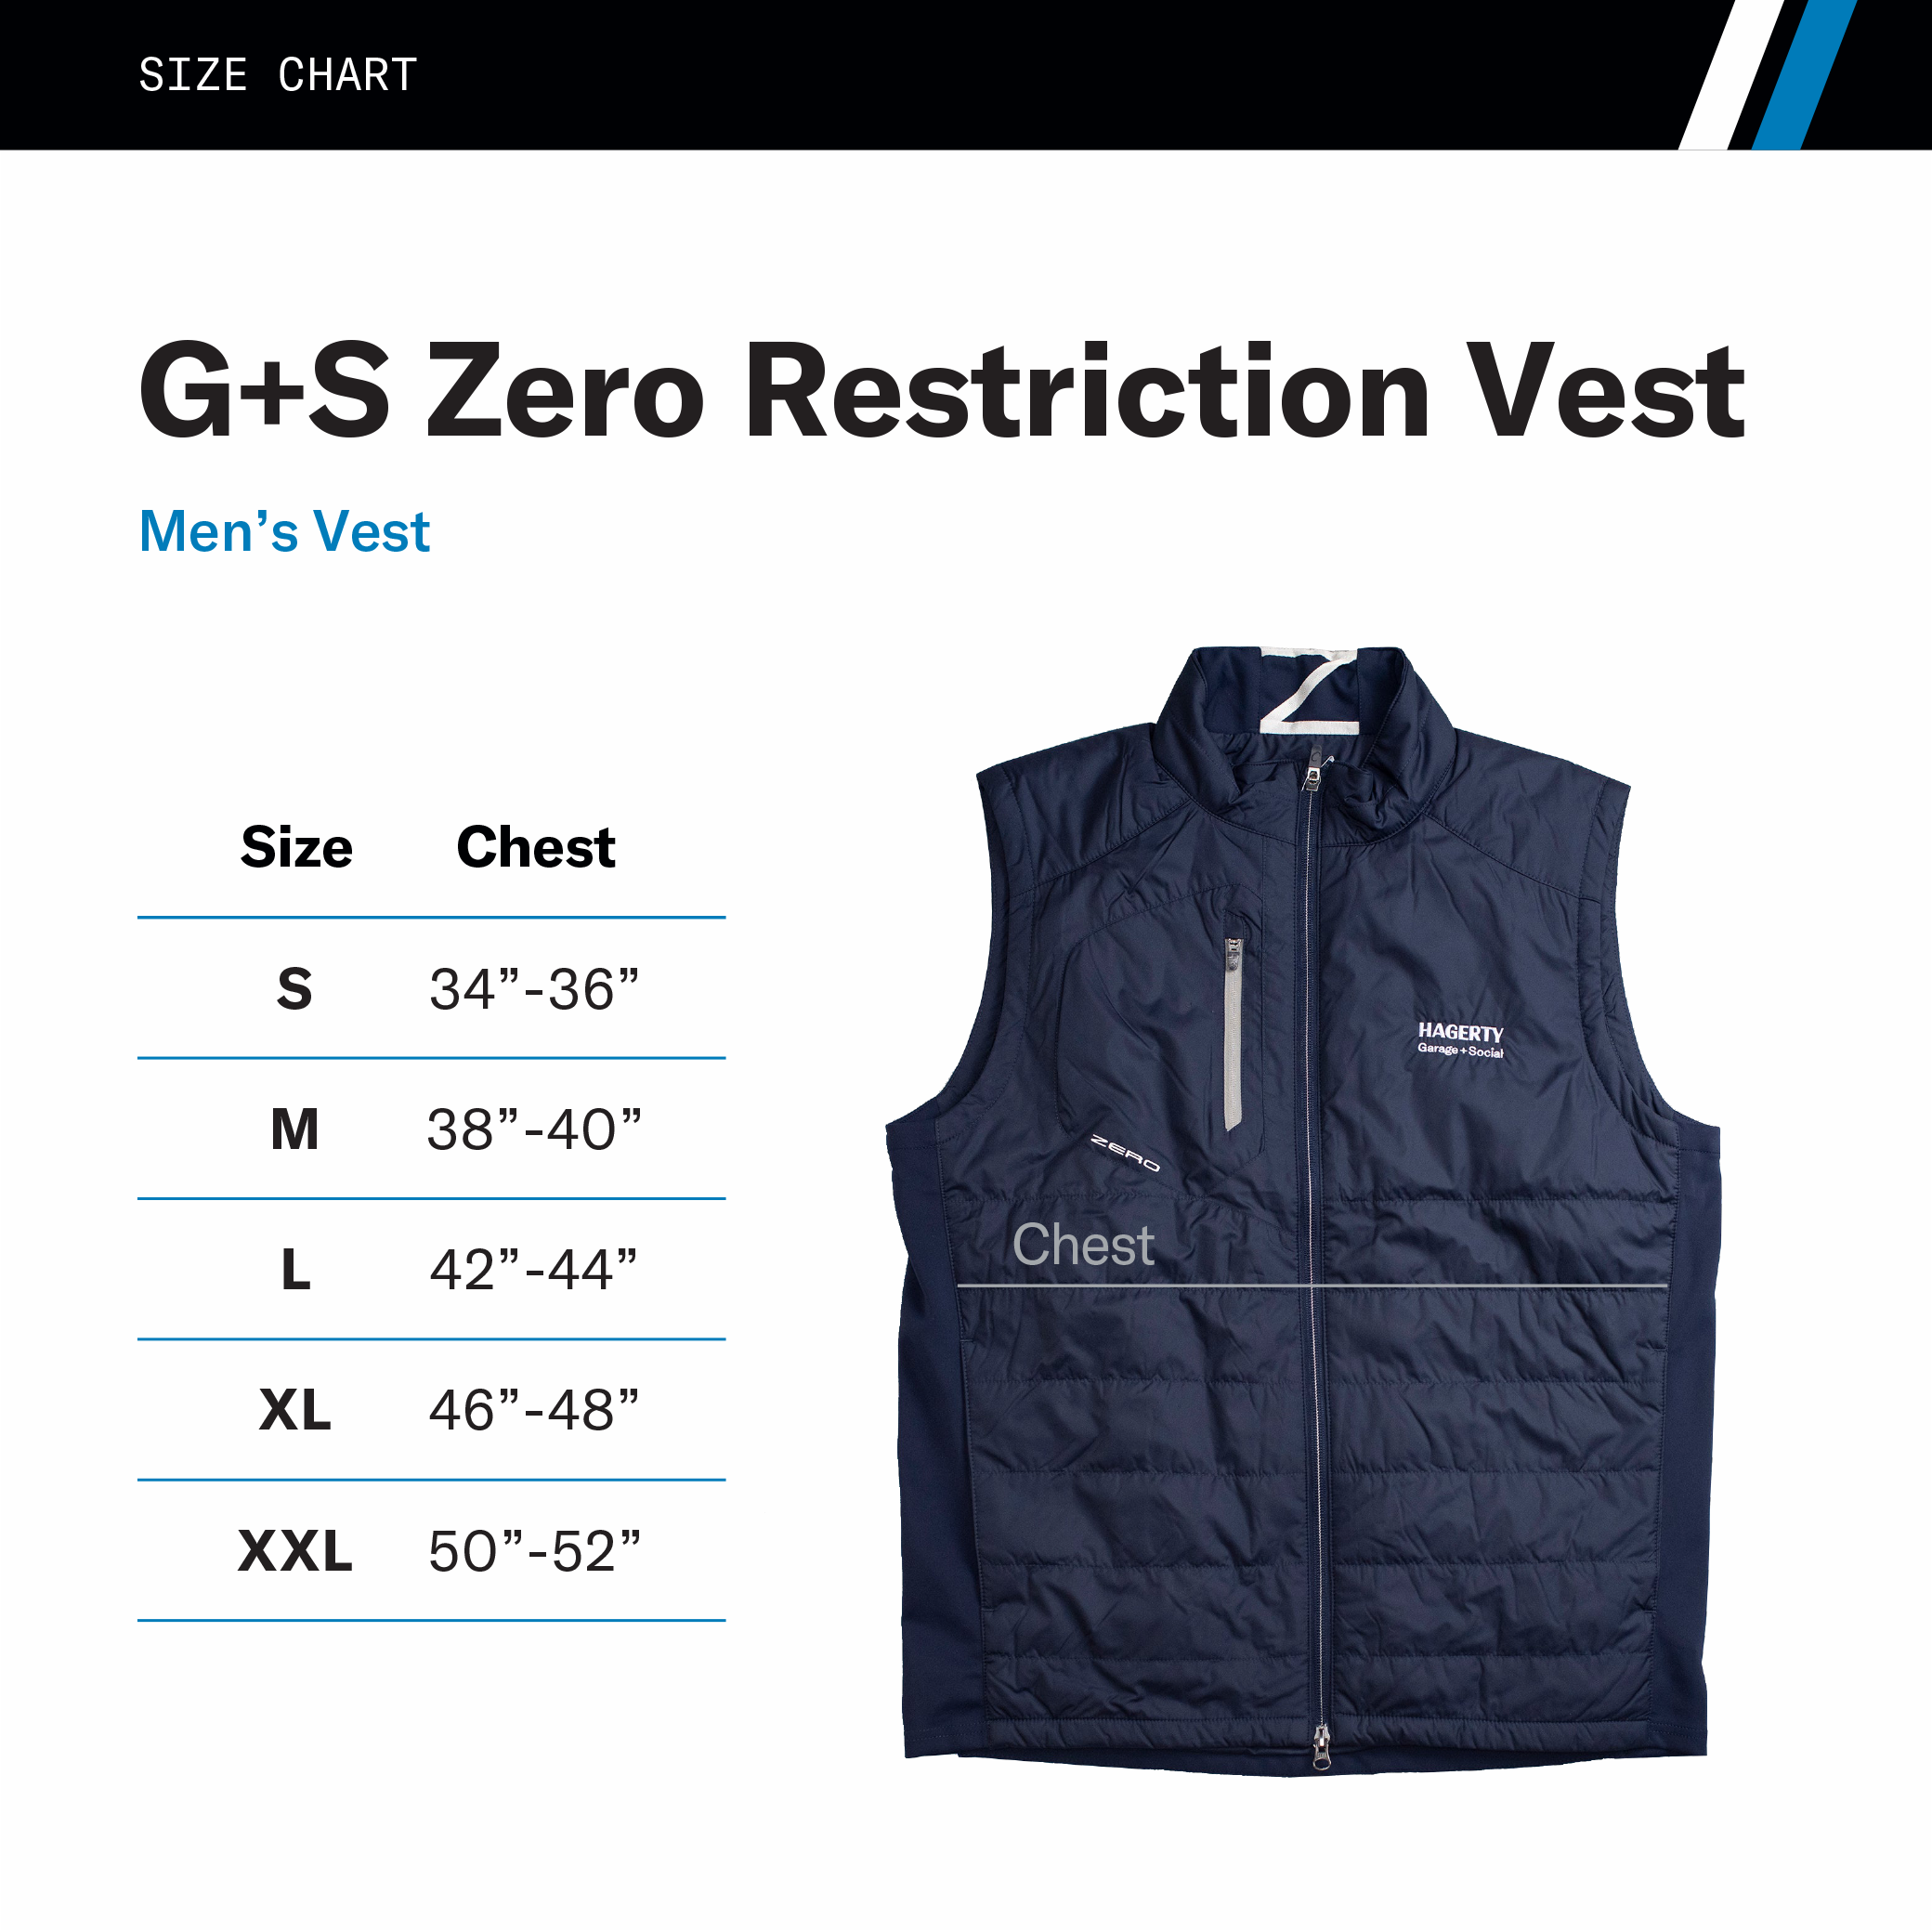 G+S Zero Restriction Vest